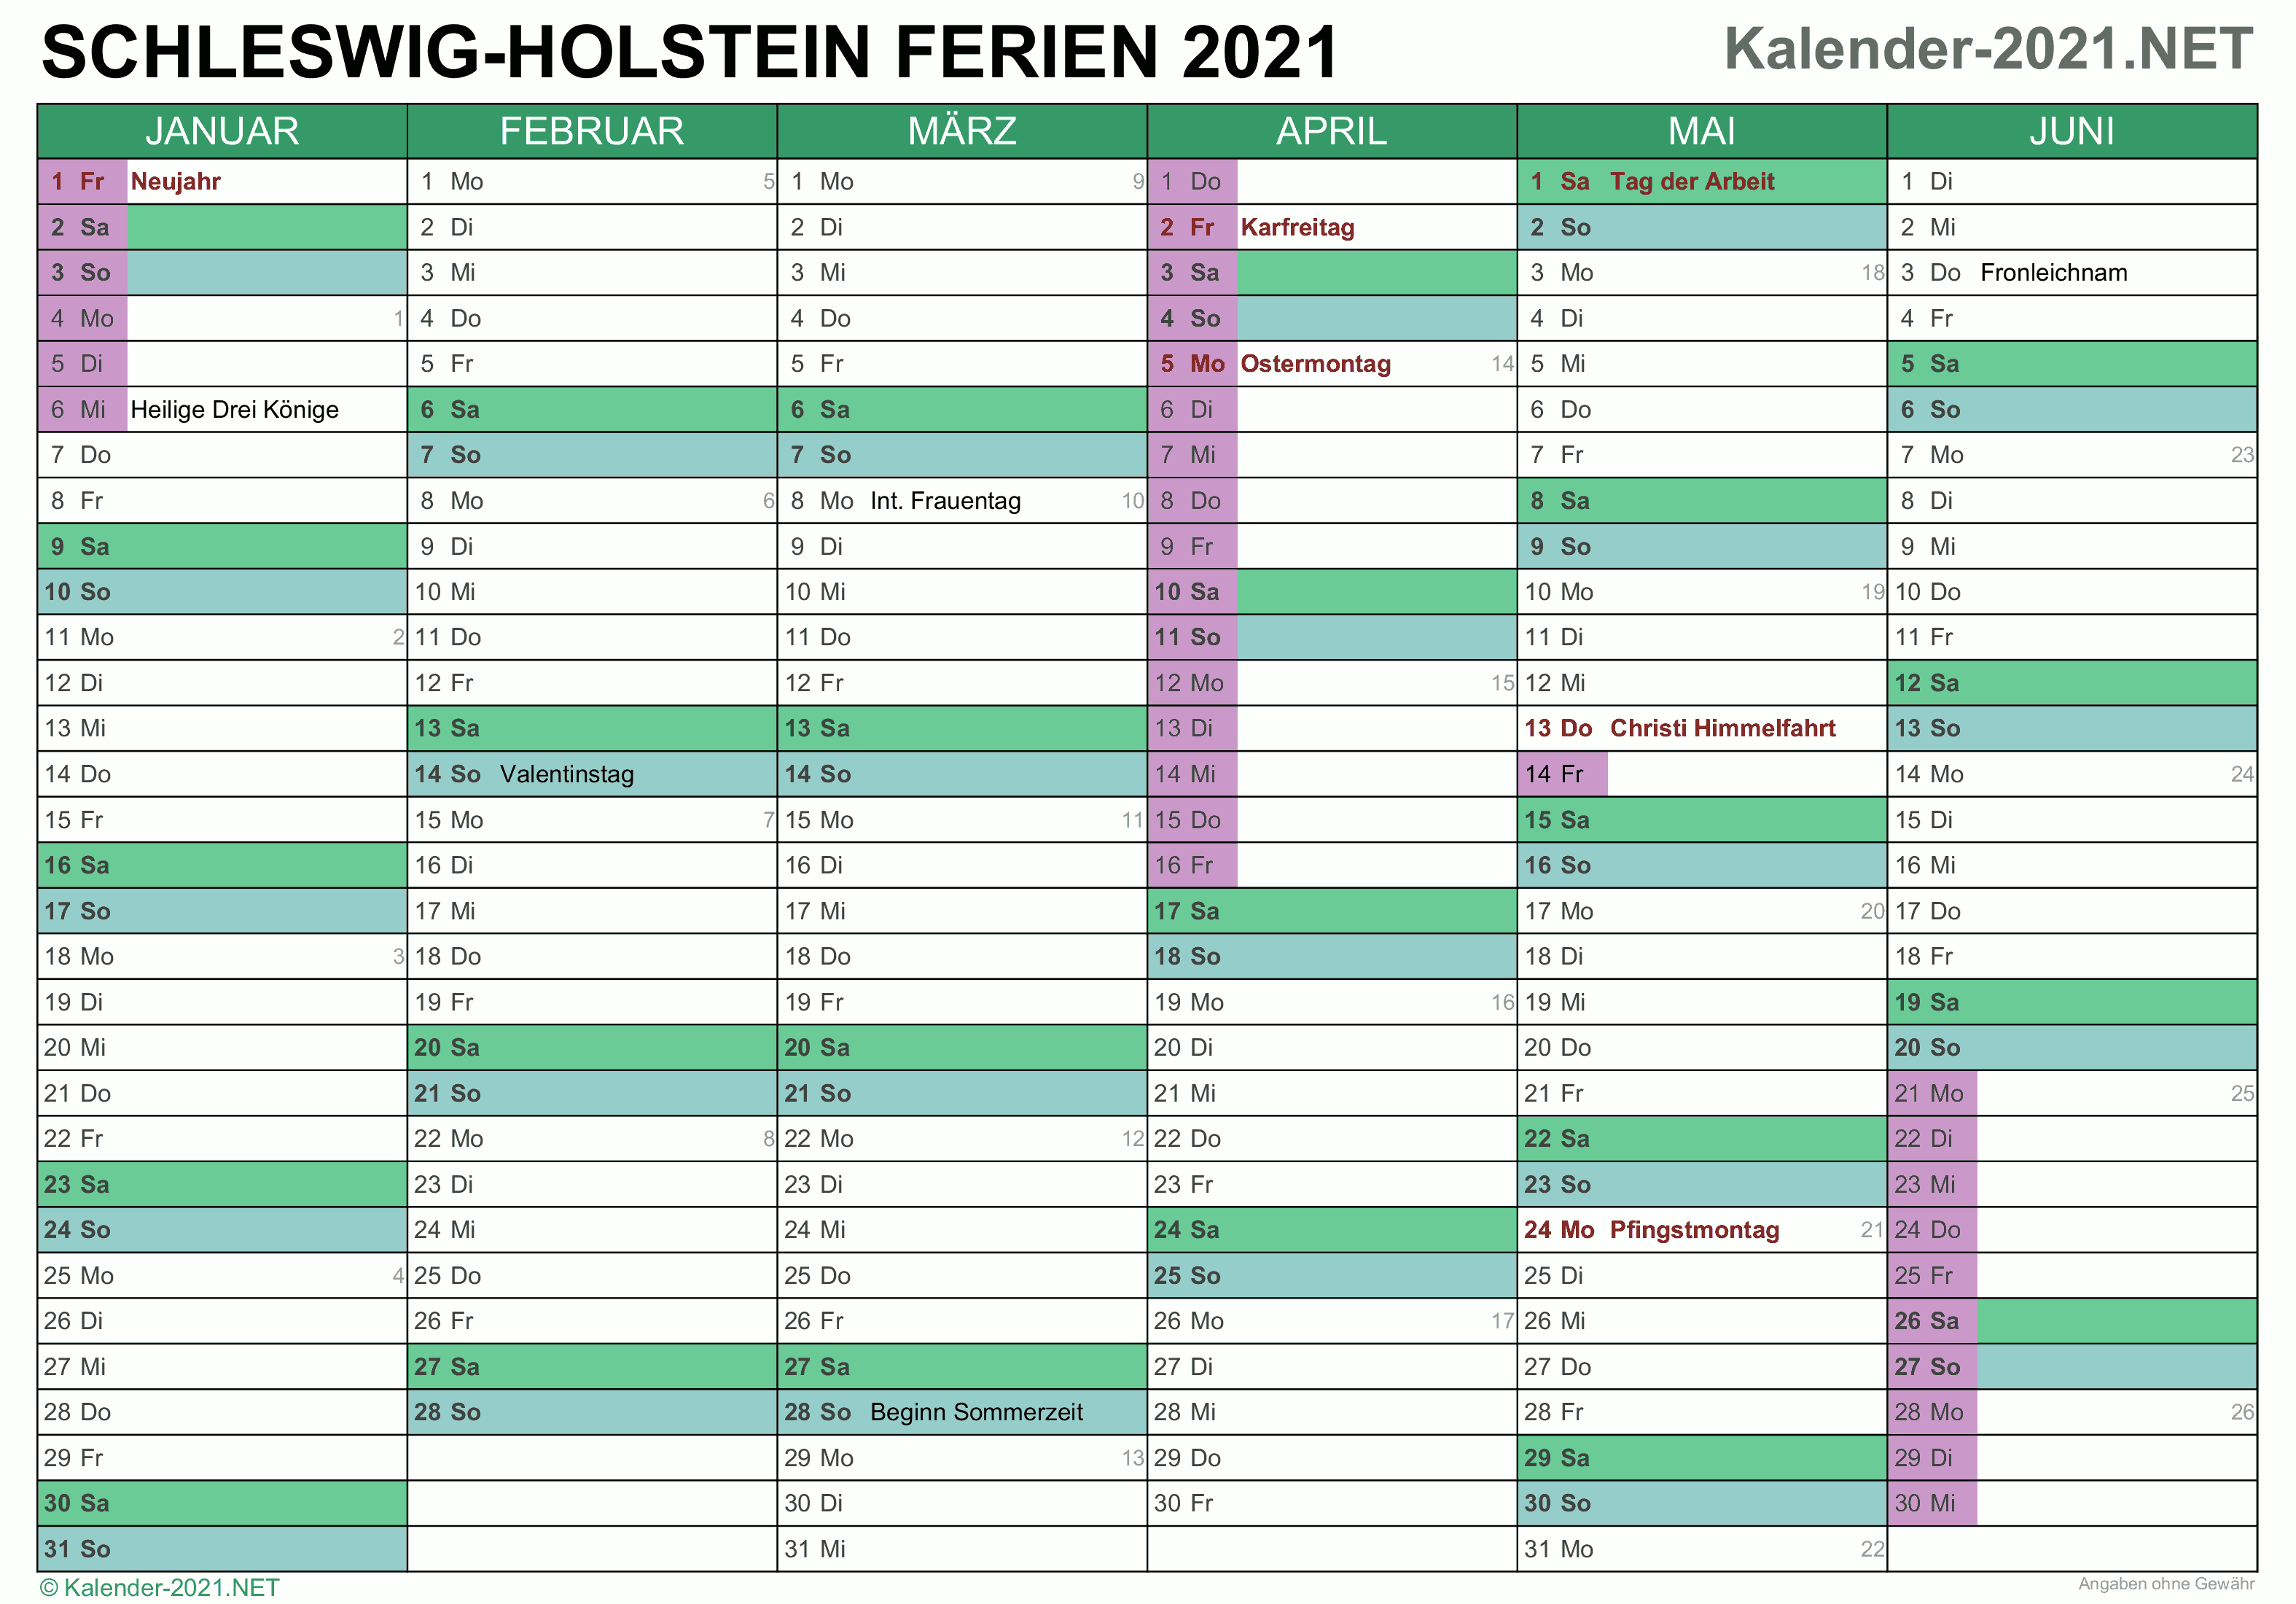 Koalitionsvertrag Schleswig Holstein 2021